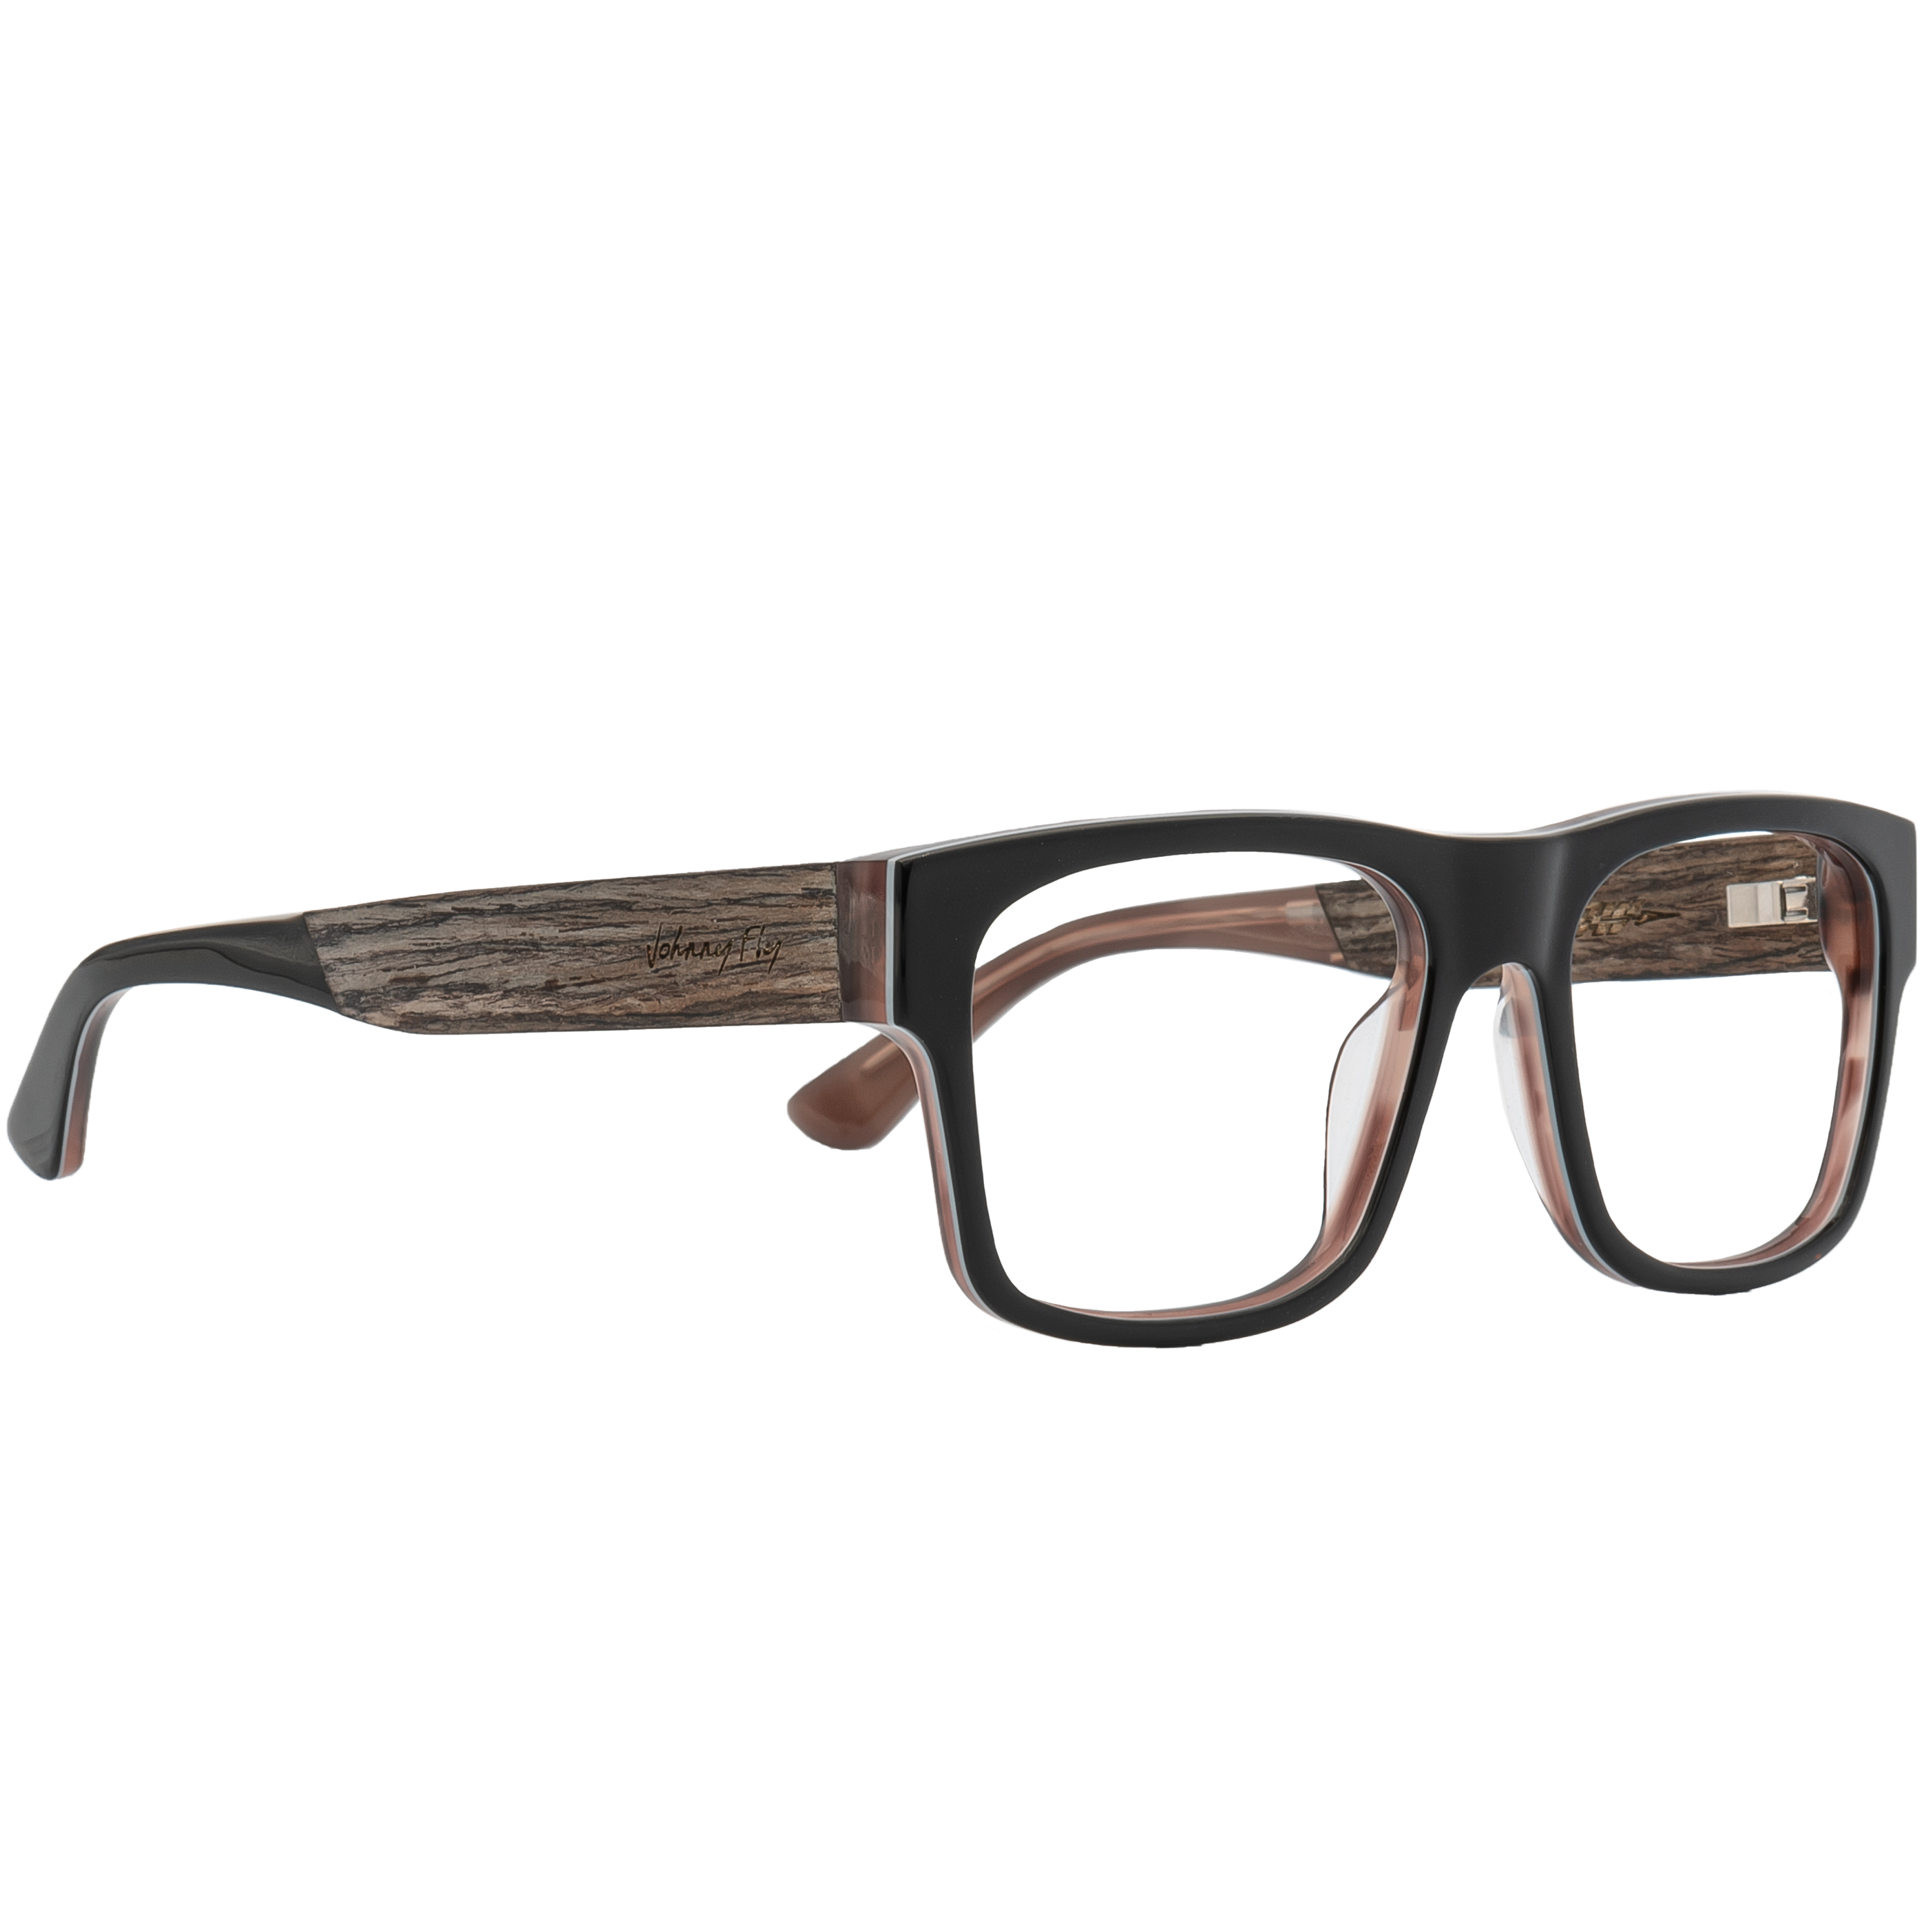 ARROW Frame - Layered Black - Eyeglasses Frame - Johnny Fly Eyewear 